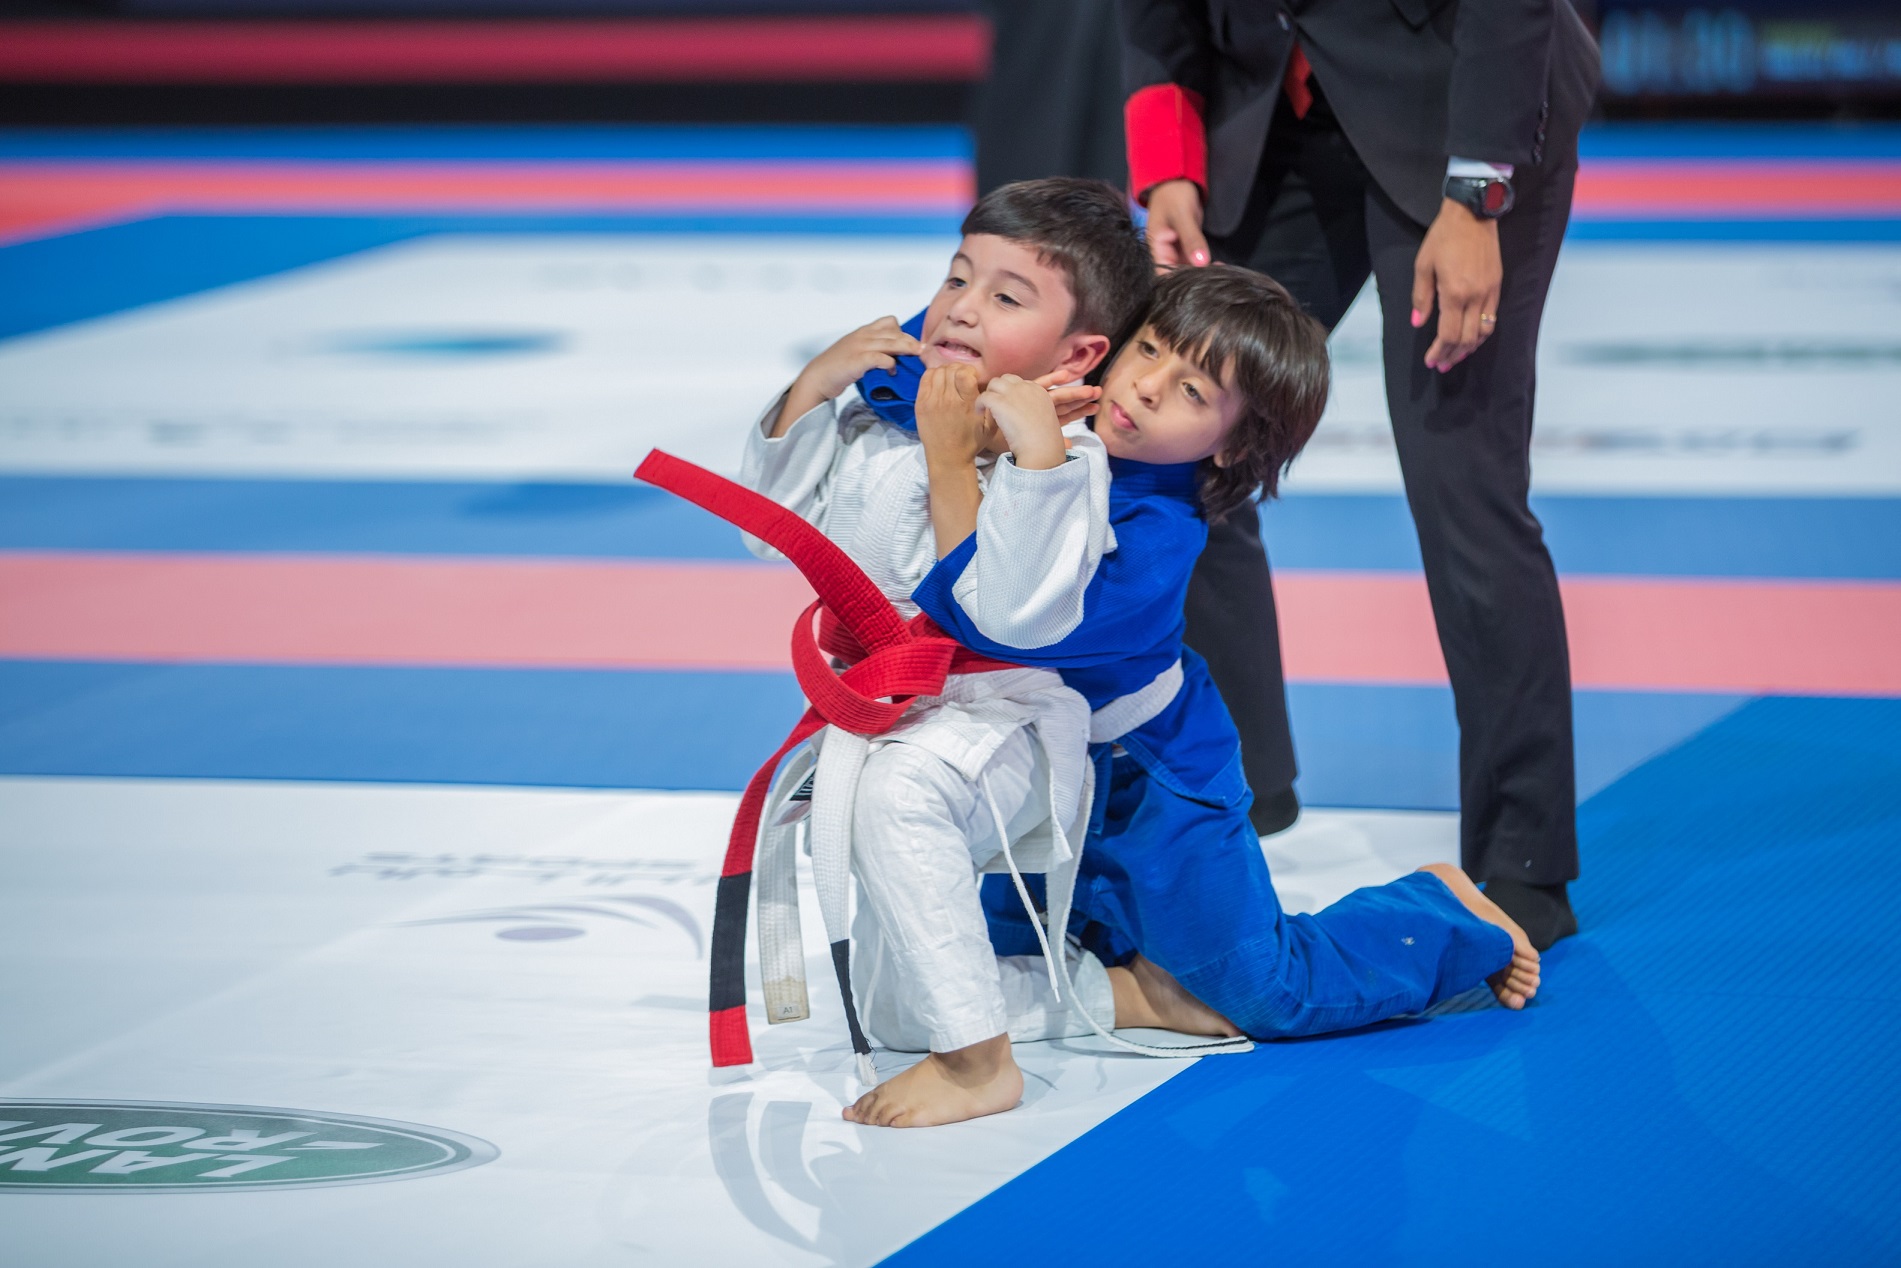 Abu Dhabi World Jiu-Jitsu Professional Championship 2020 To Start On 11th April